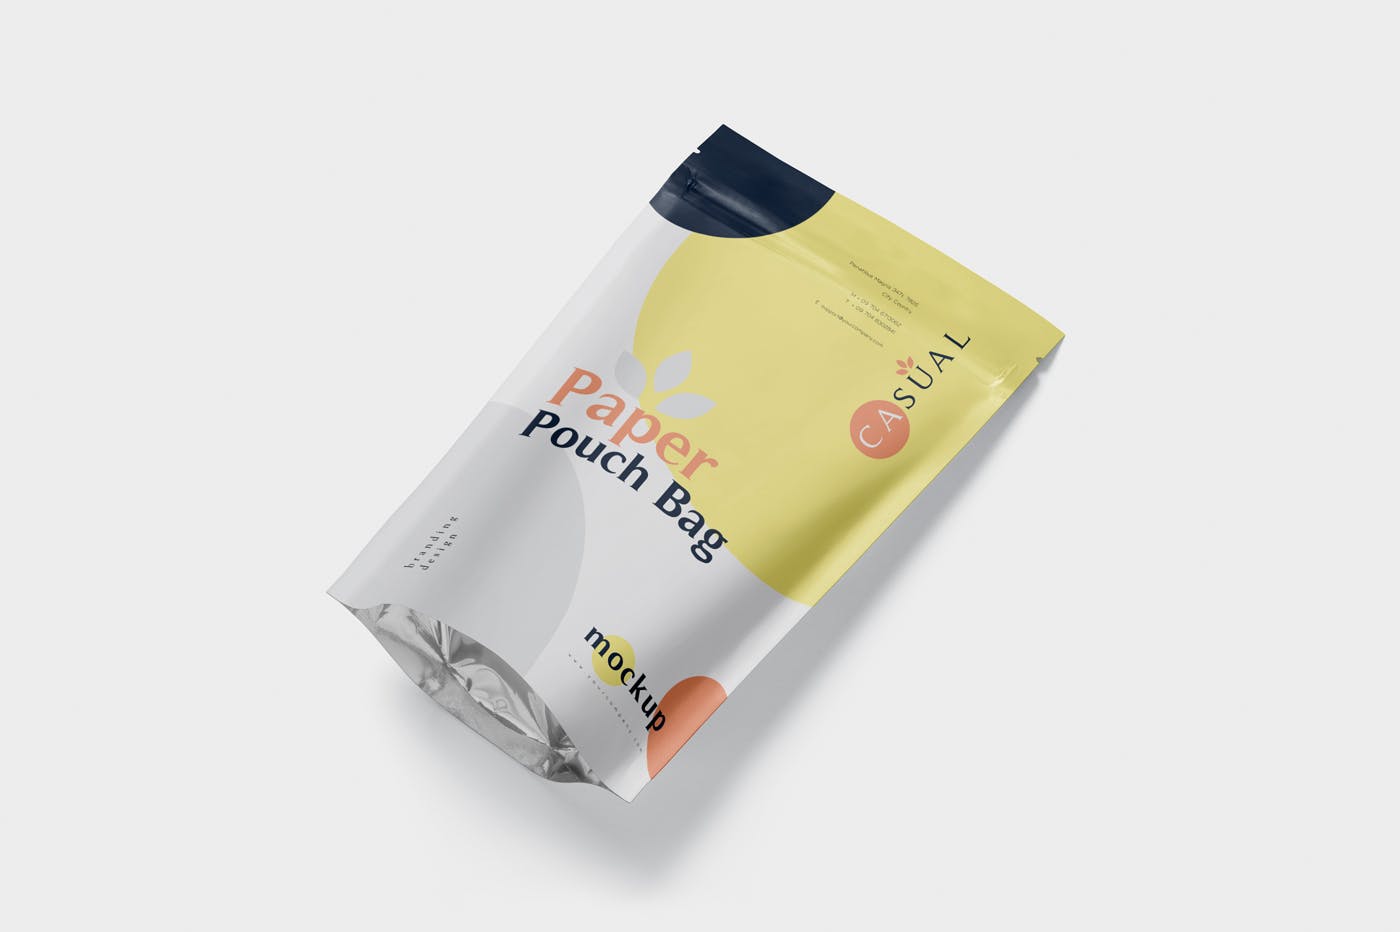 食品自封袋包装设计效果图第一素材精选 Paper Pouch Bag Mockup – Large Size插图(2)